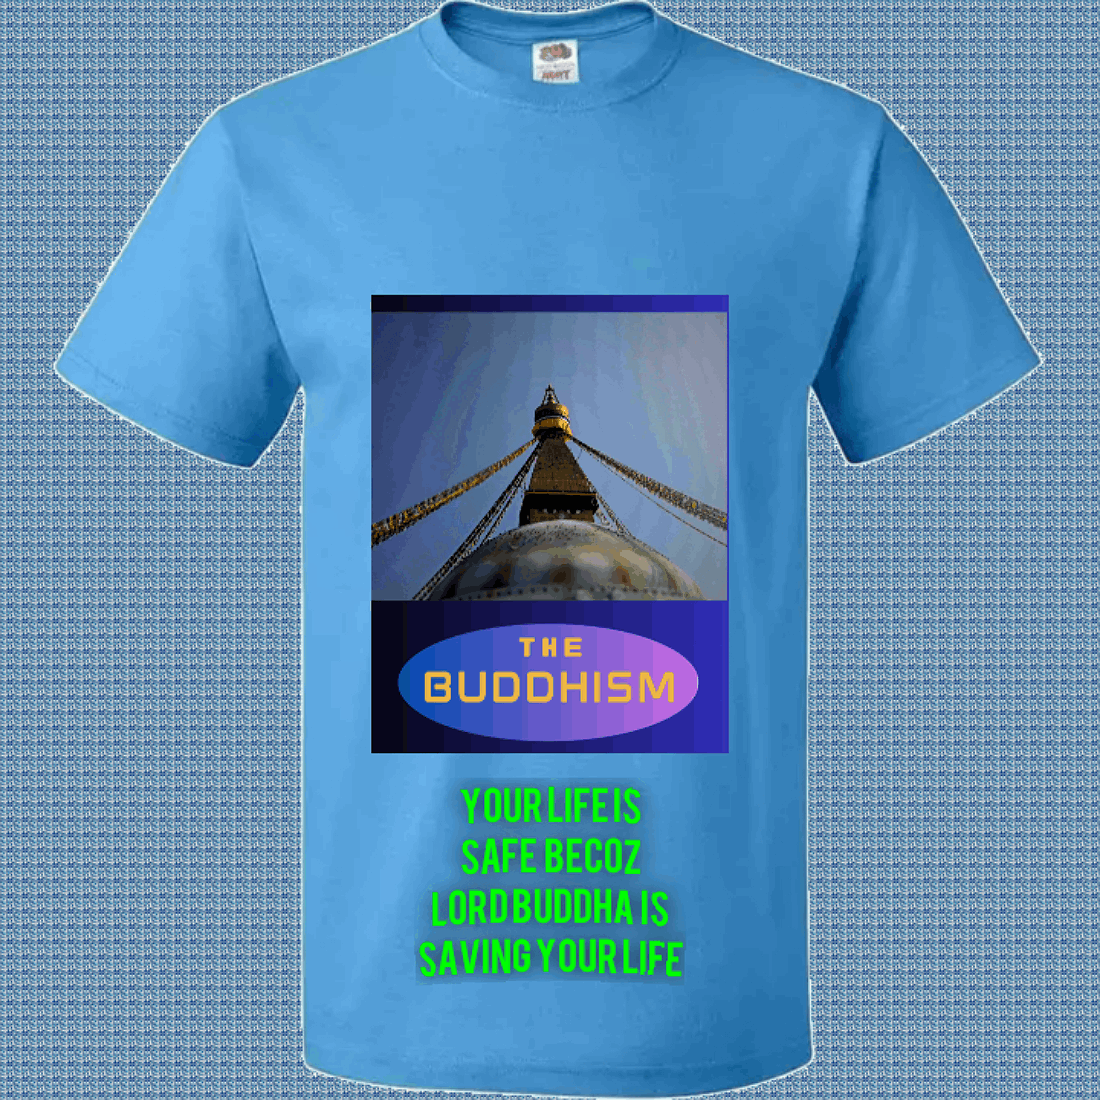 Gautam buddha (t-shirt design) cover image.